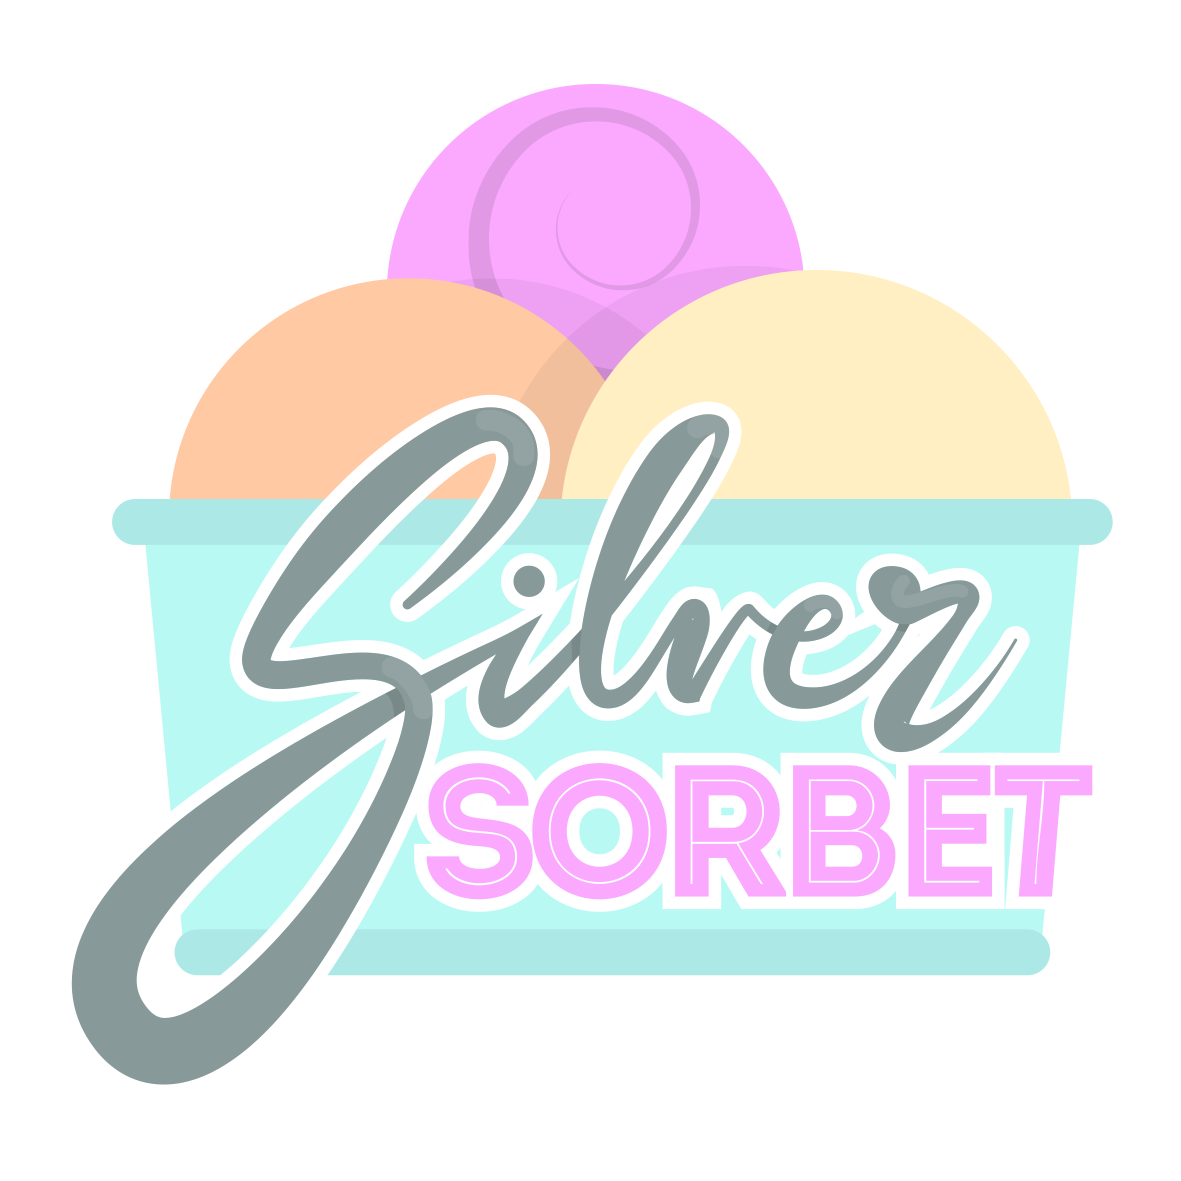 Silver Sorbet